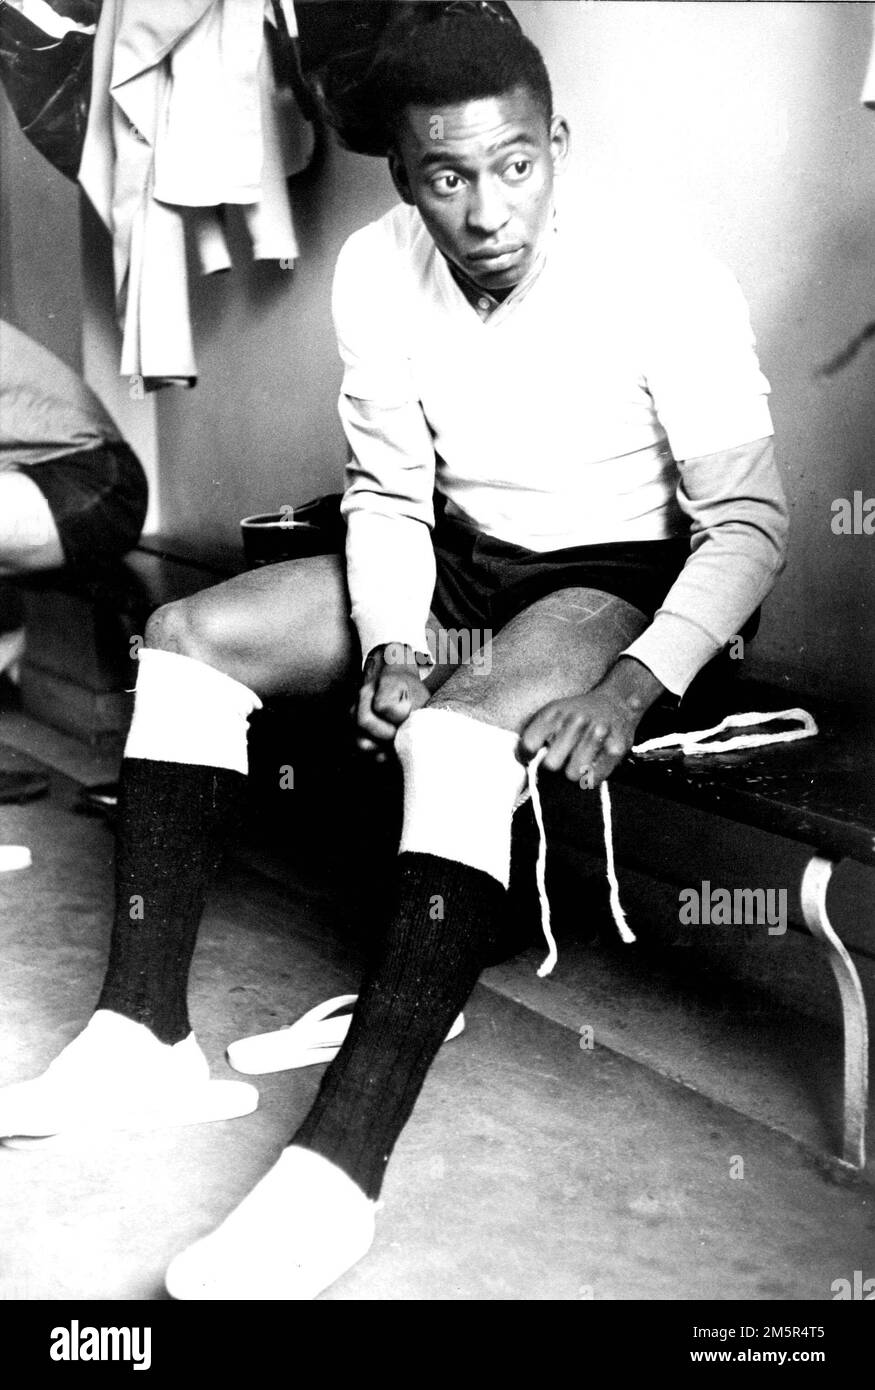 1971 - PELE  suits up in a locker room, 1971. (Credit Image: © Giancarlo Botti/ZUMA Wire) Stock Photo